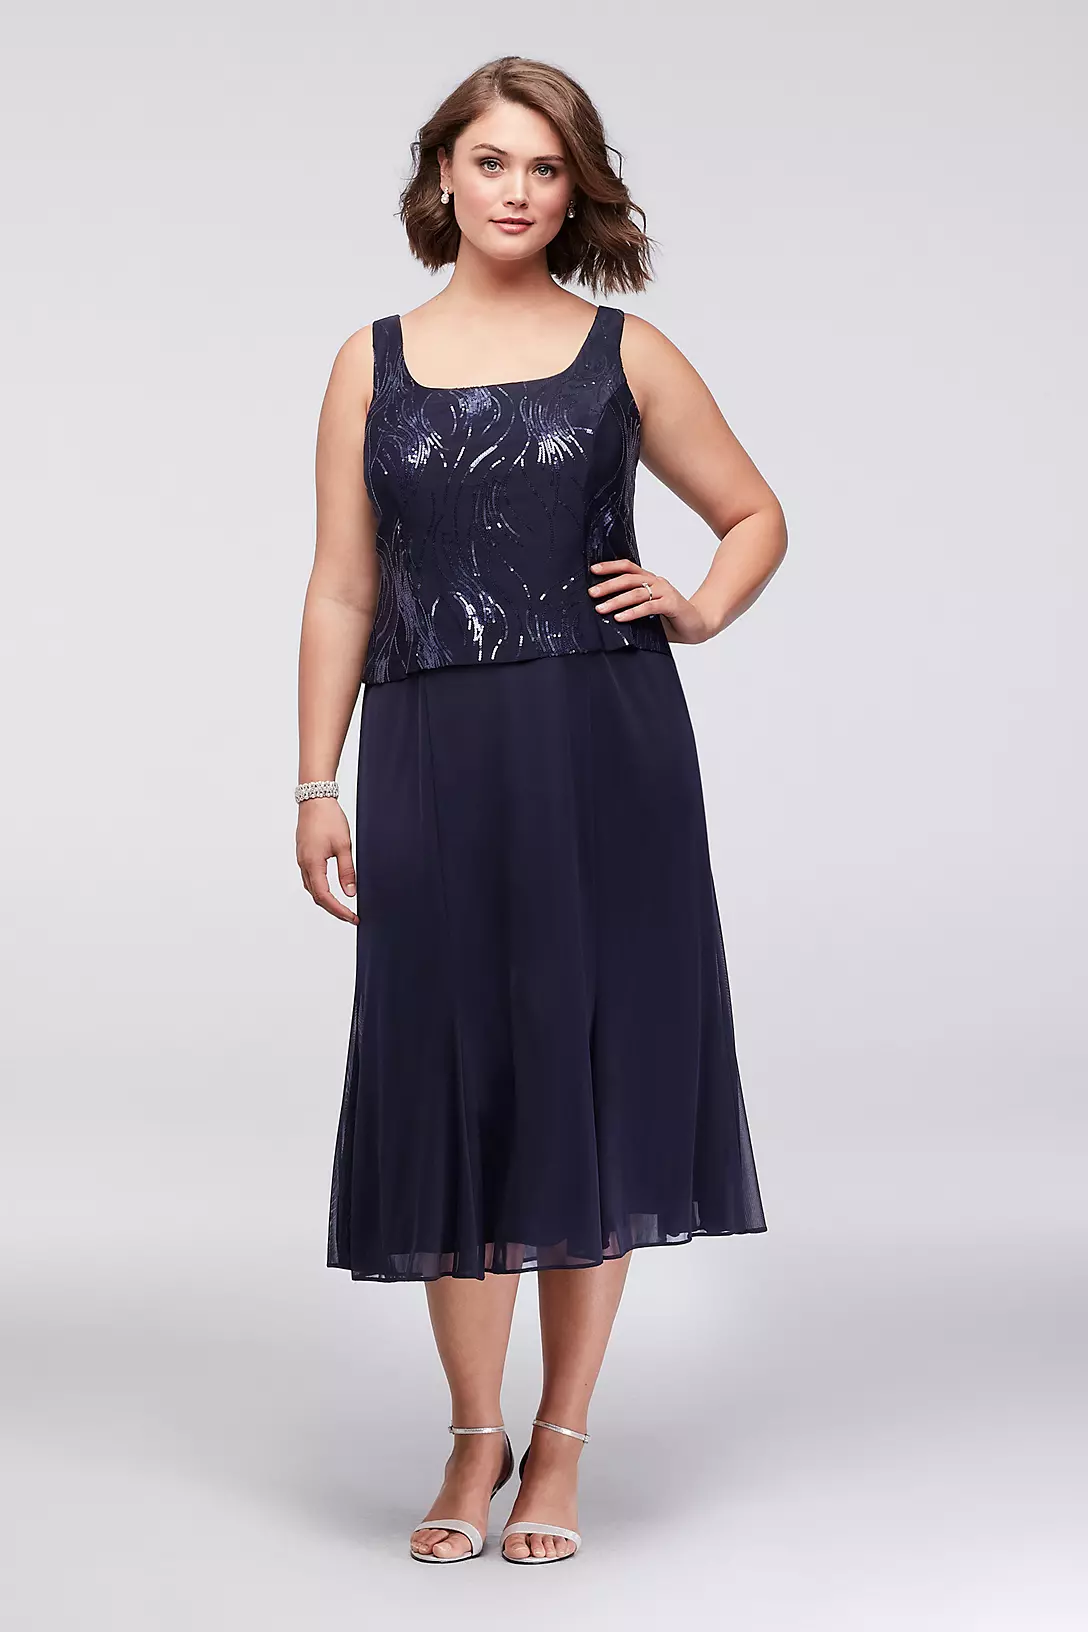 Sequined Tea-Length Plus Size Dress and Jacket Set Image 3